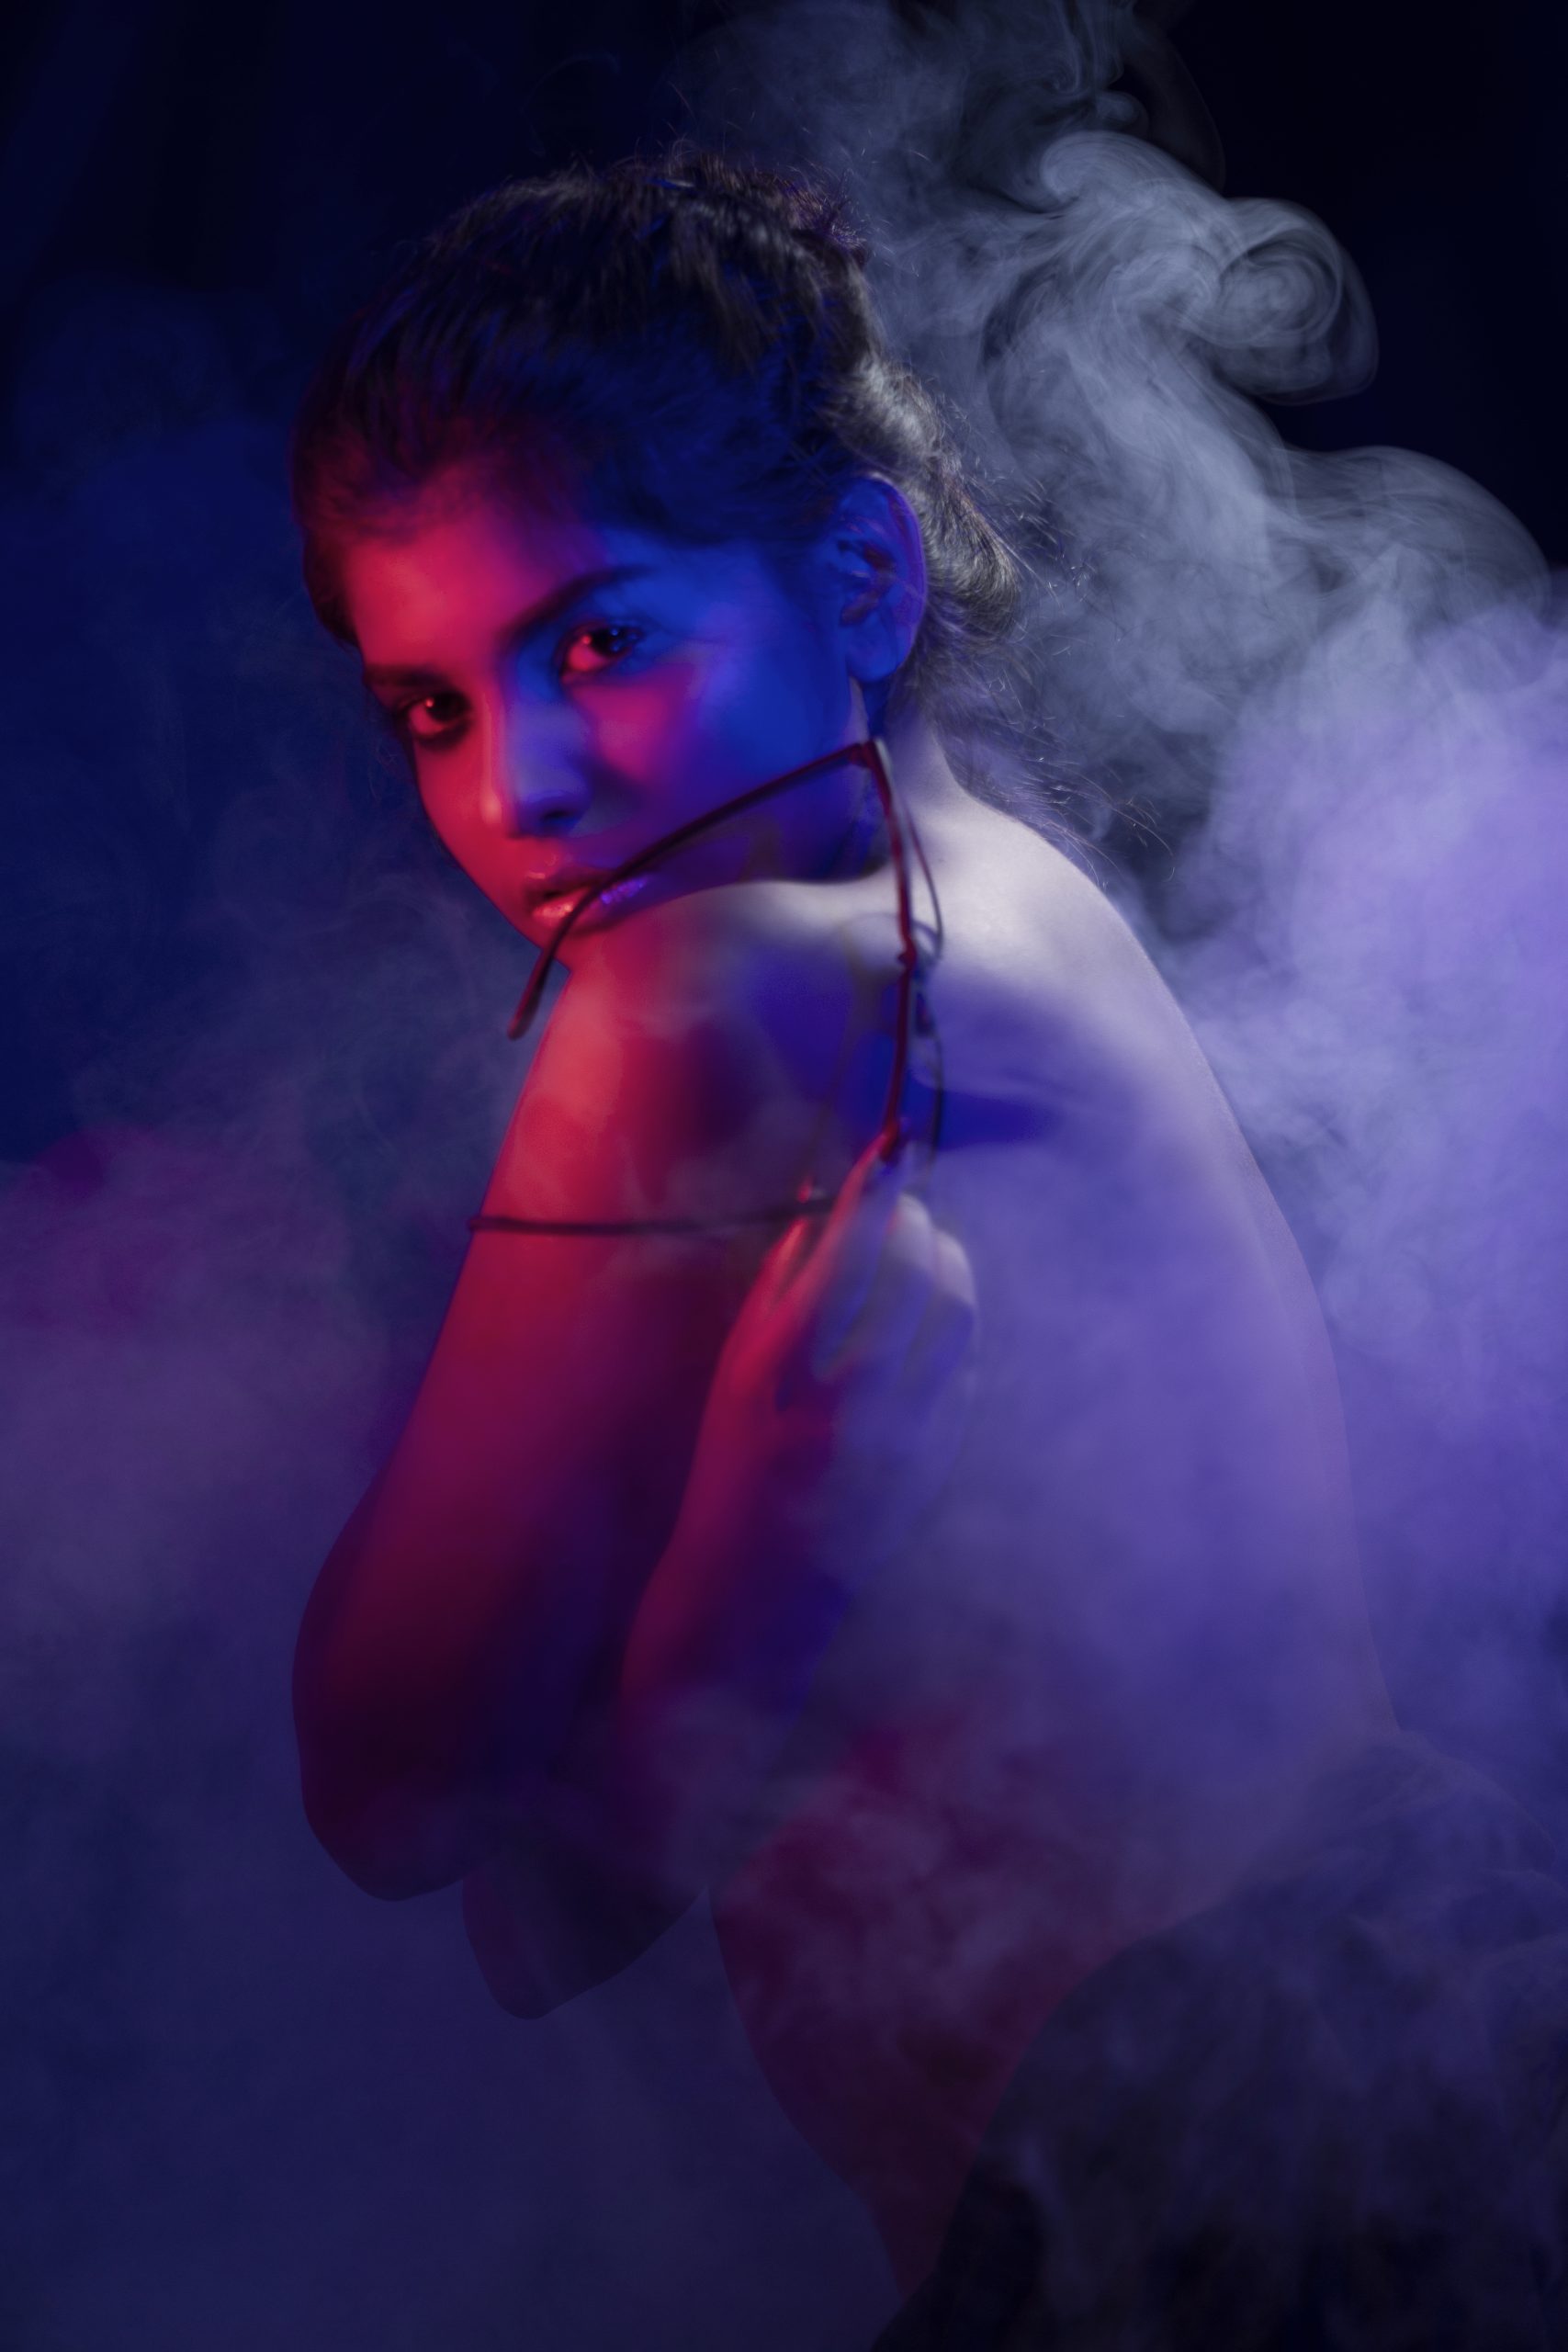 A girl in smoke